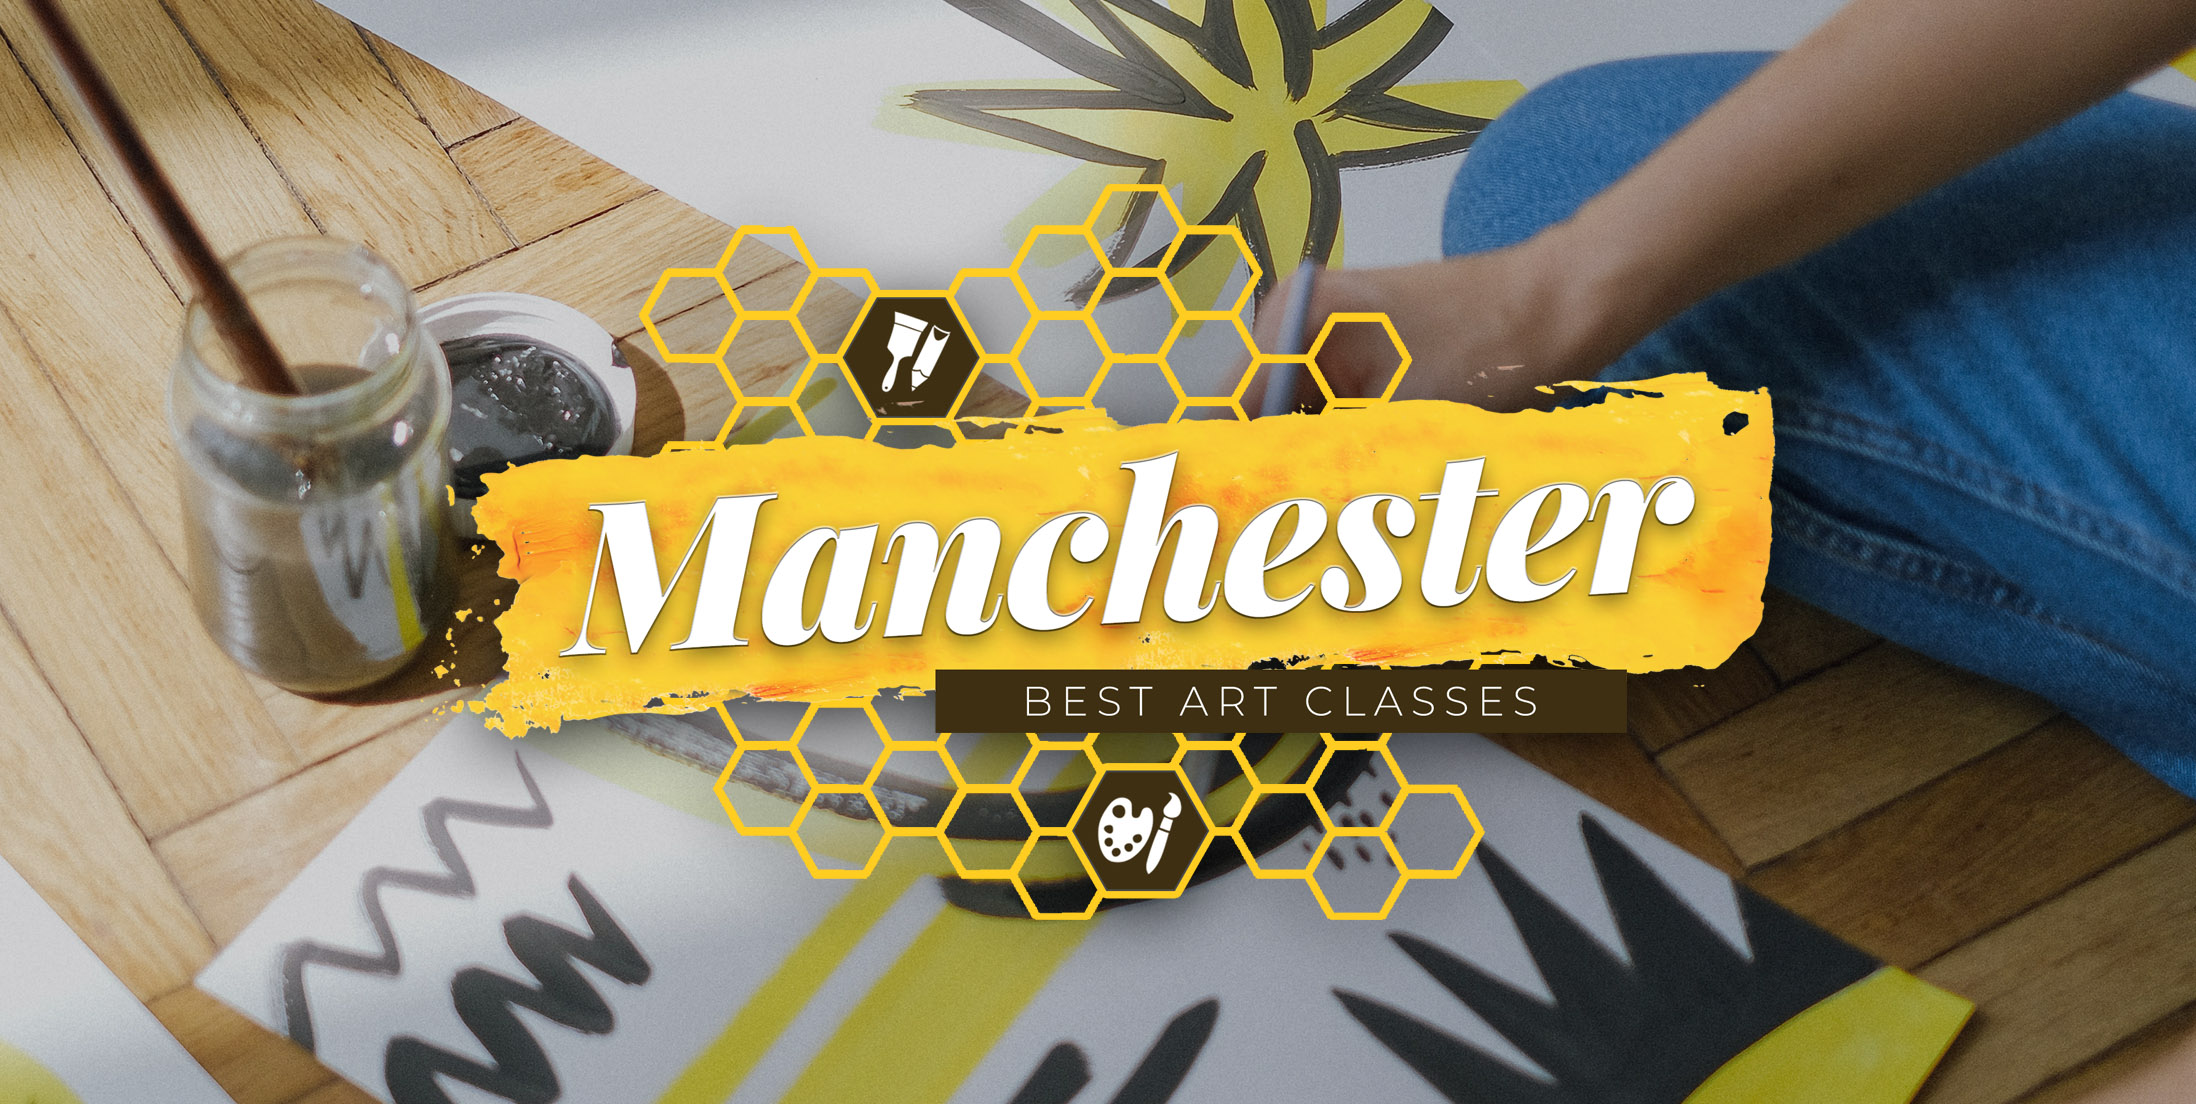 Best Art Classes in Manchester